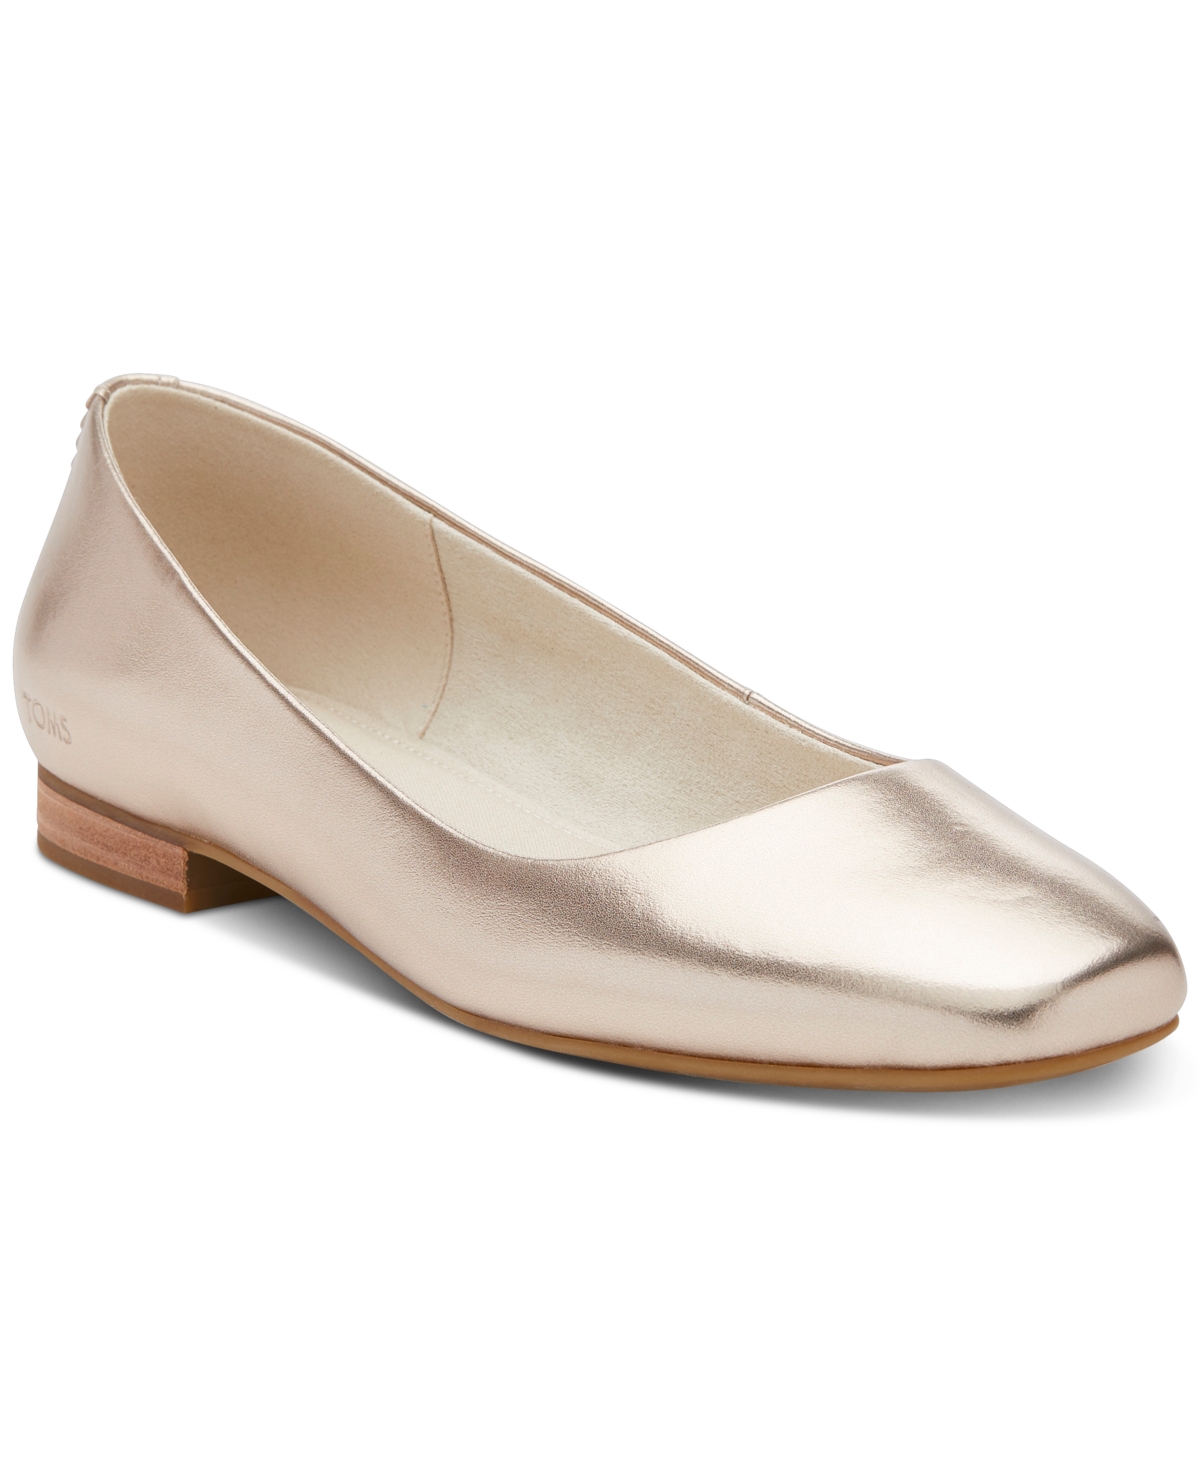 Women's Briella Square-Toe Slip-On Ballet Flats - Light Gold Metallic Leather